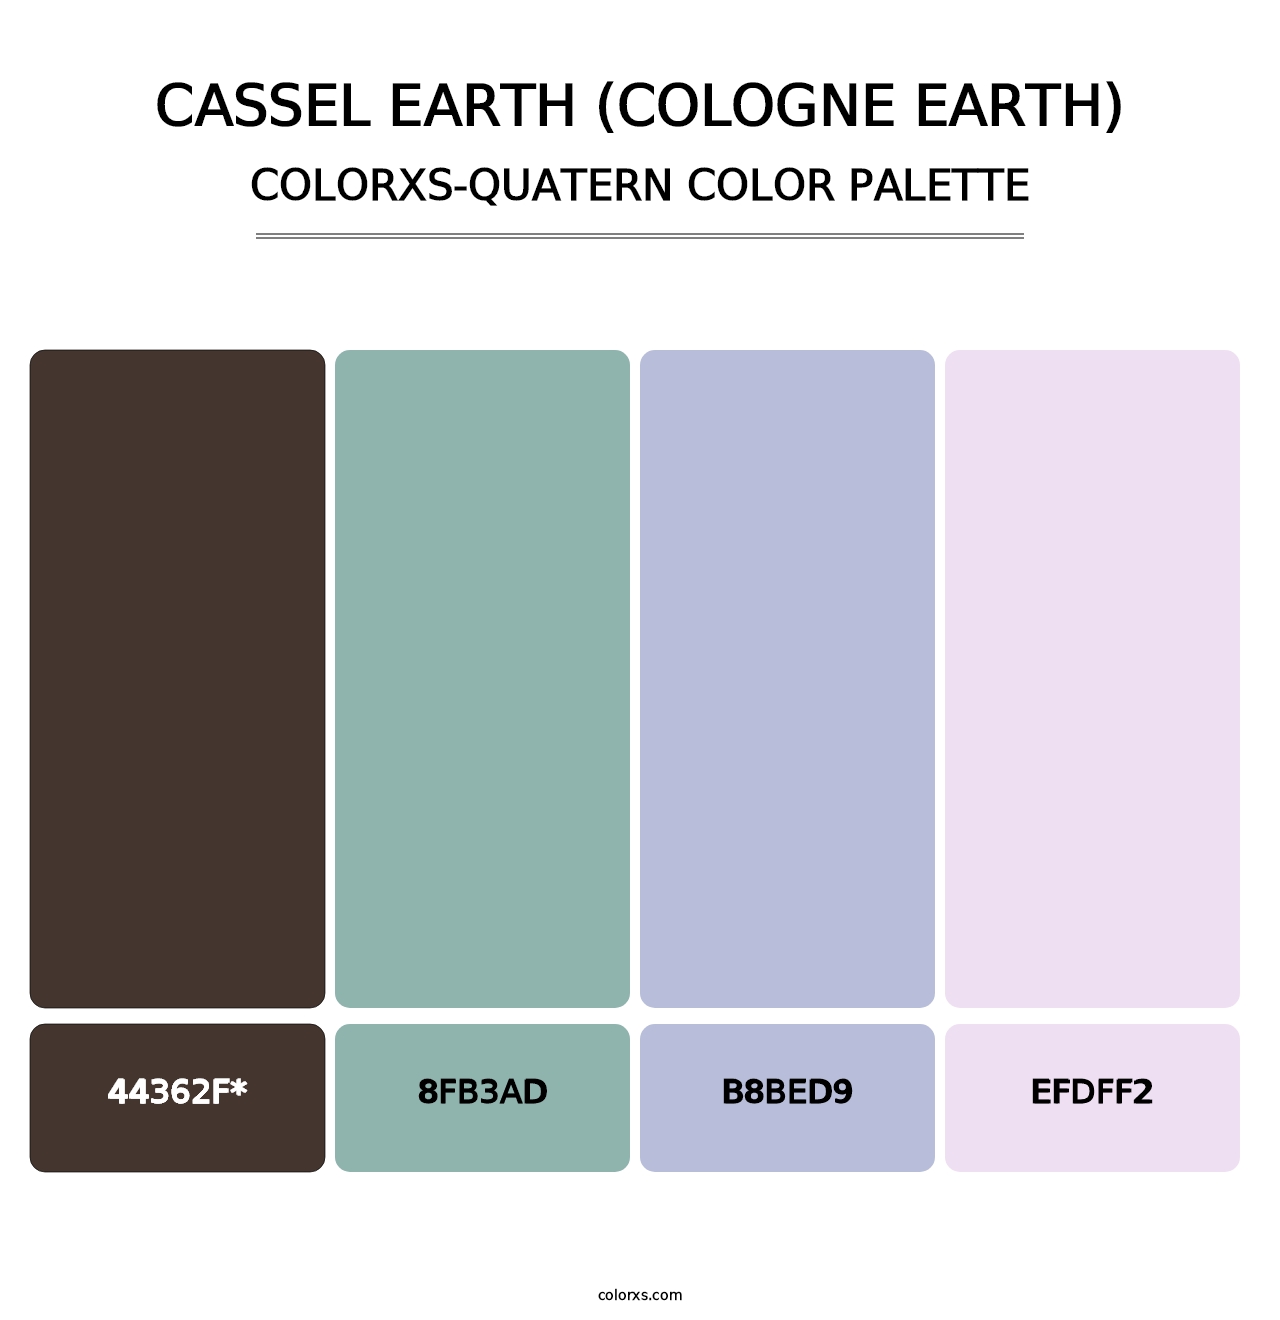 Cassel Earth (Cologne Earth) - Colorxs Quatern Palette